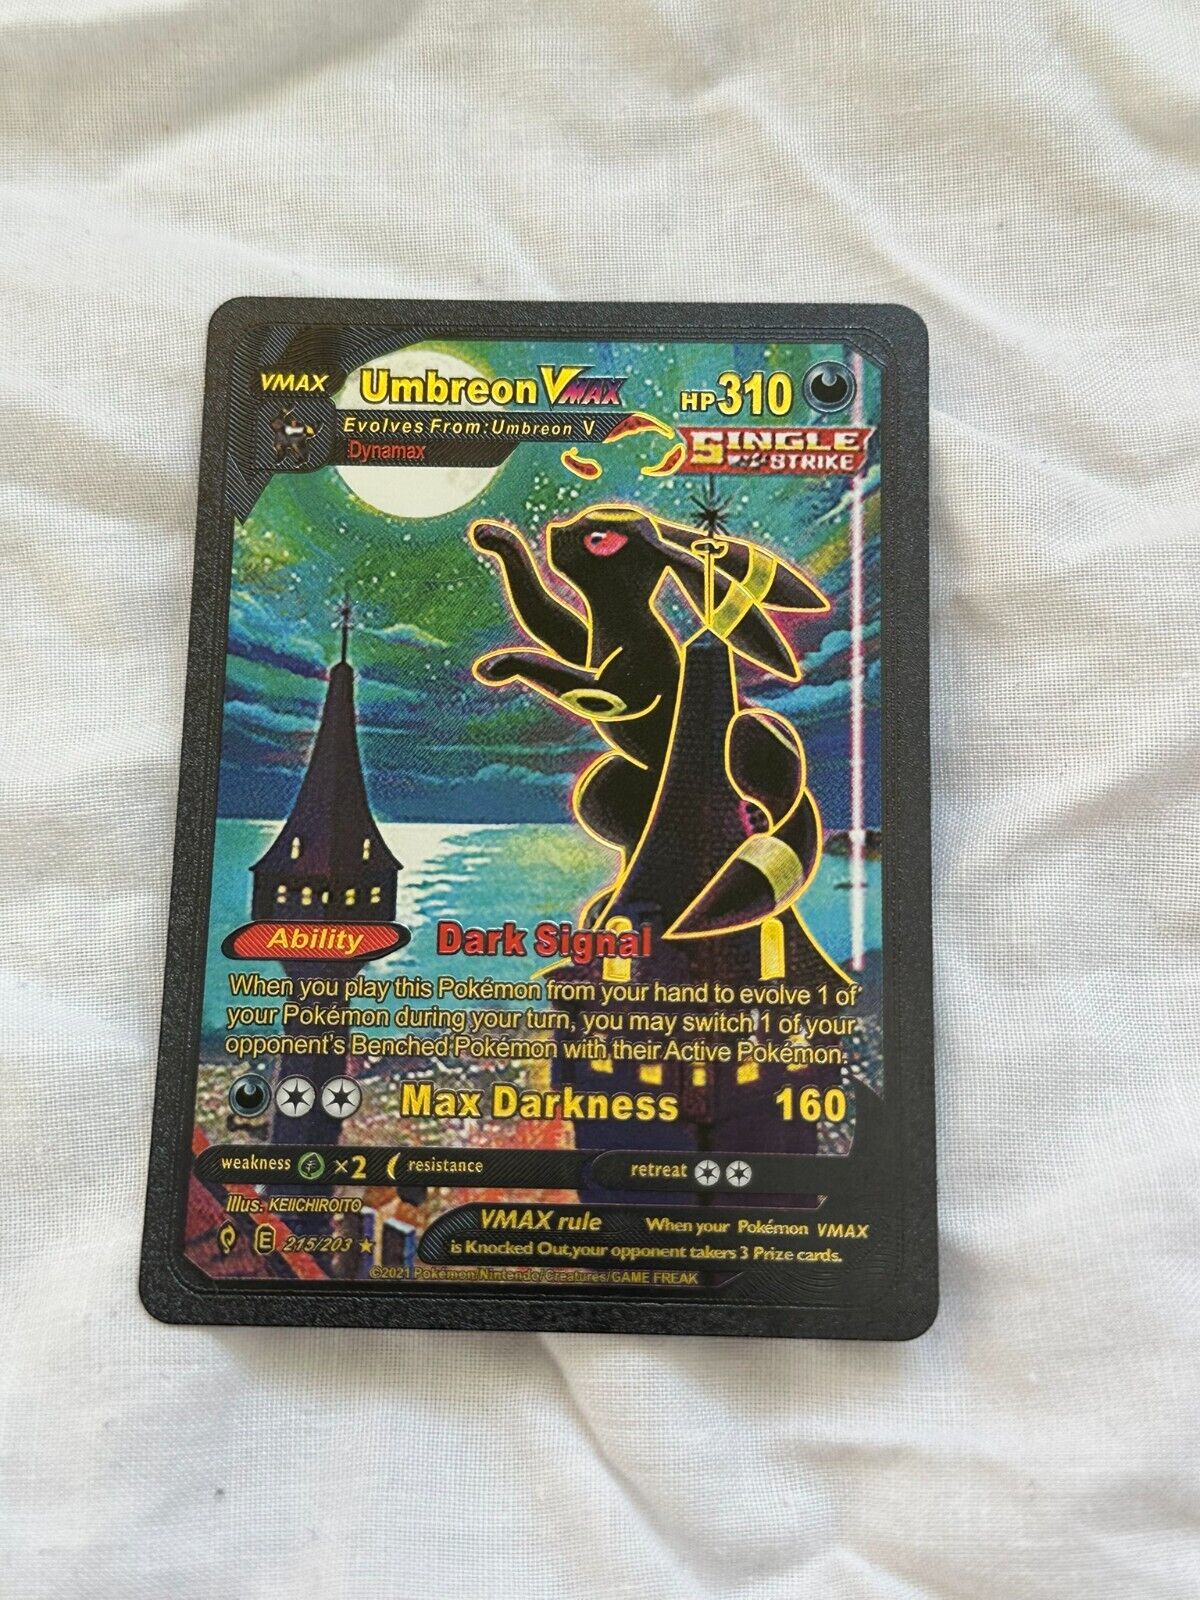 Umbreon Vmax Moonbreon Alt Art Rare Pokemon TCG Black Gold Metal Foil Card